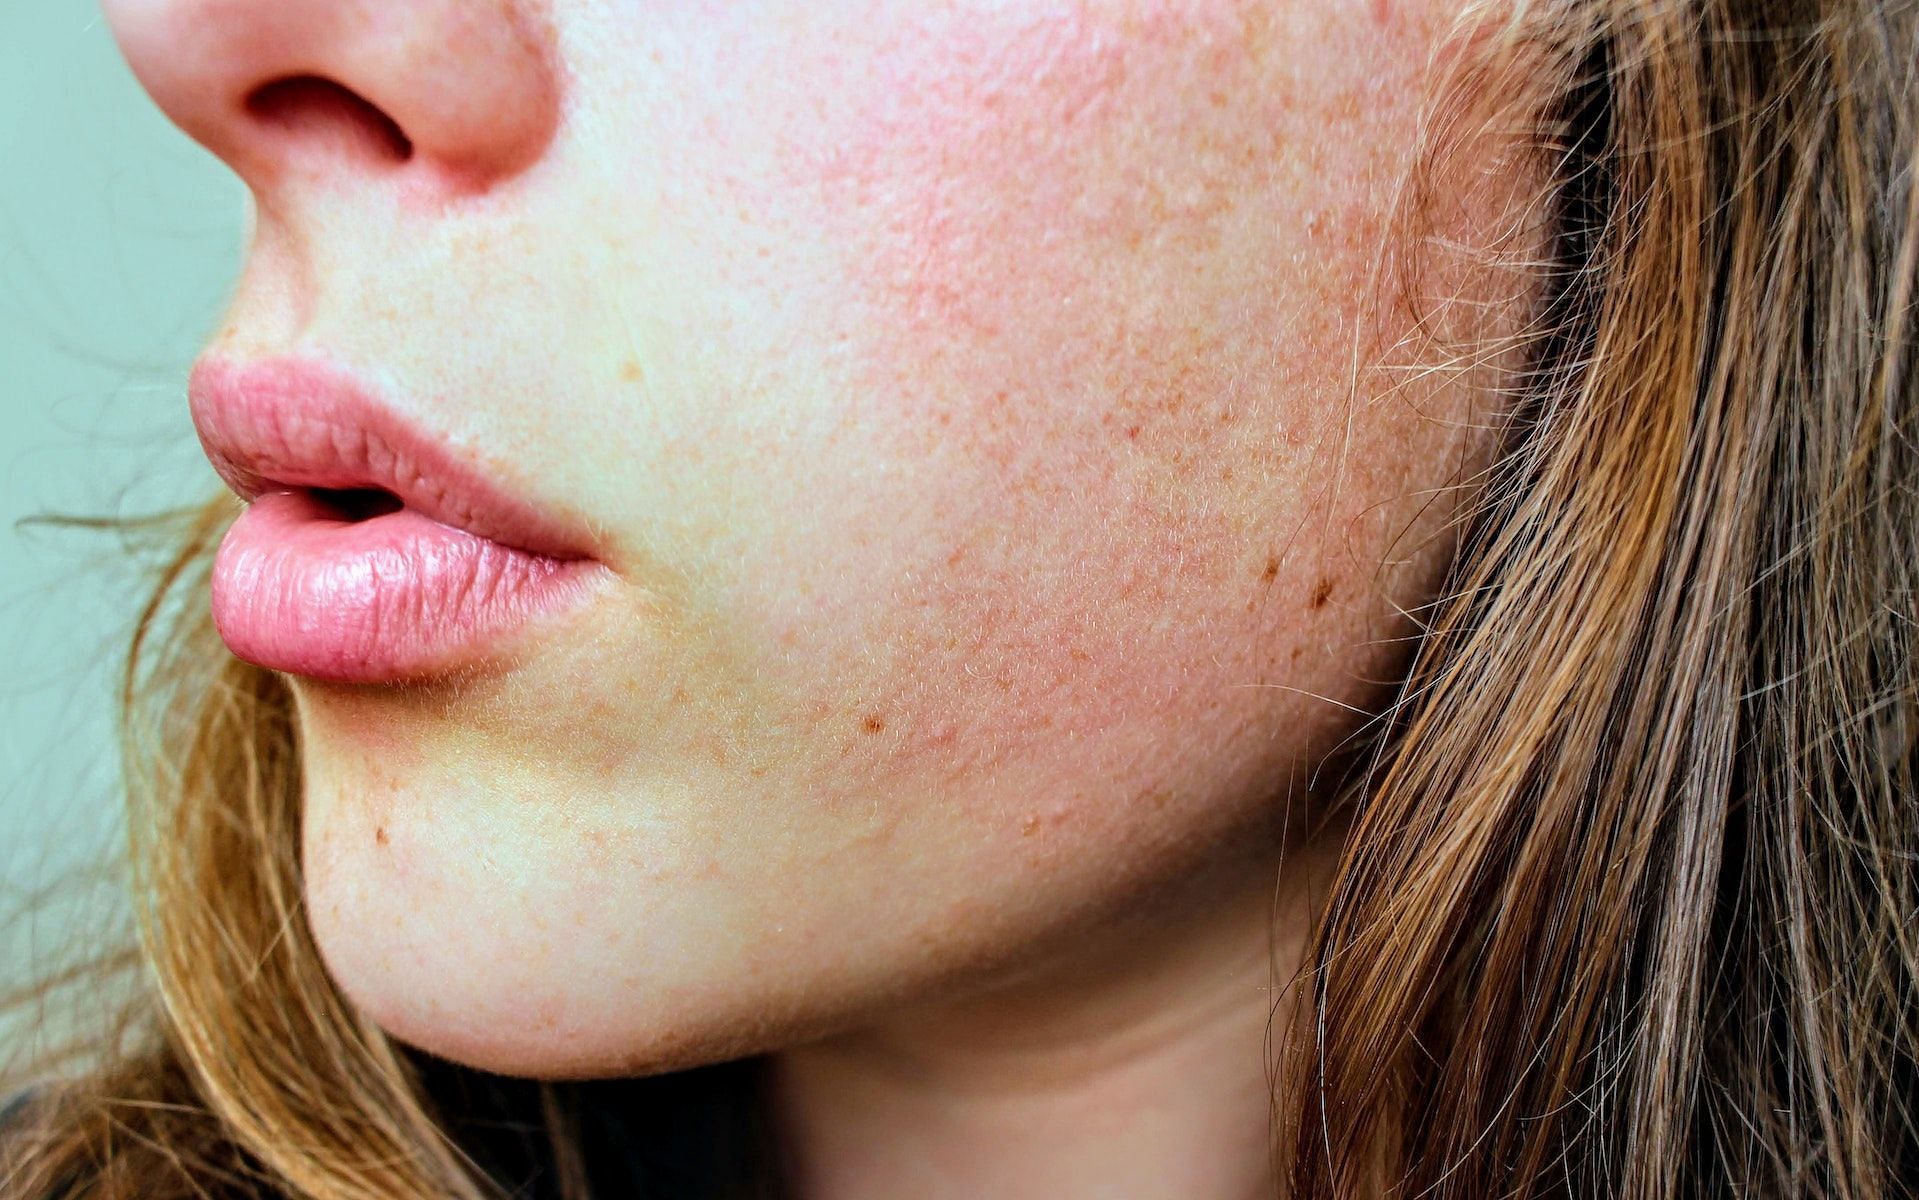 It helps get rid of dry skin. (Image via Pexels/Jenna Hamra)